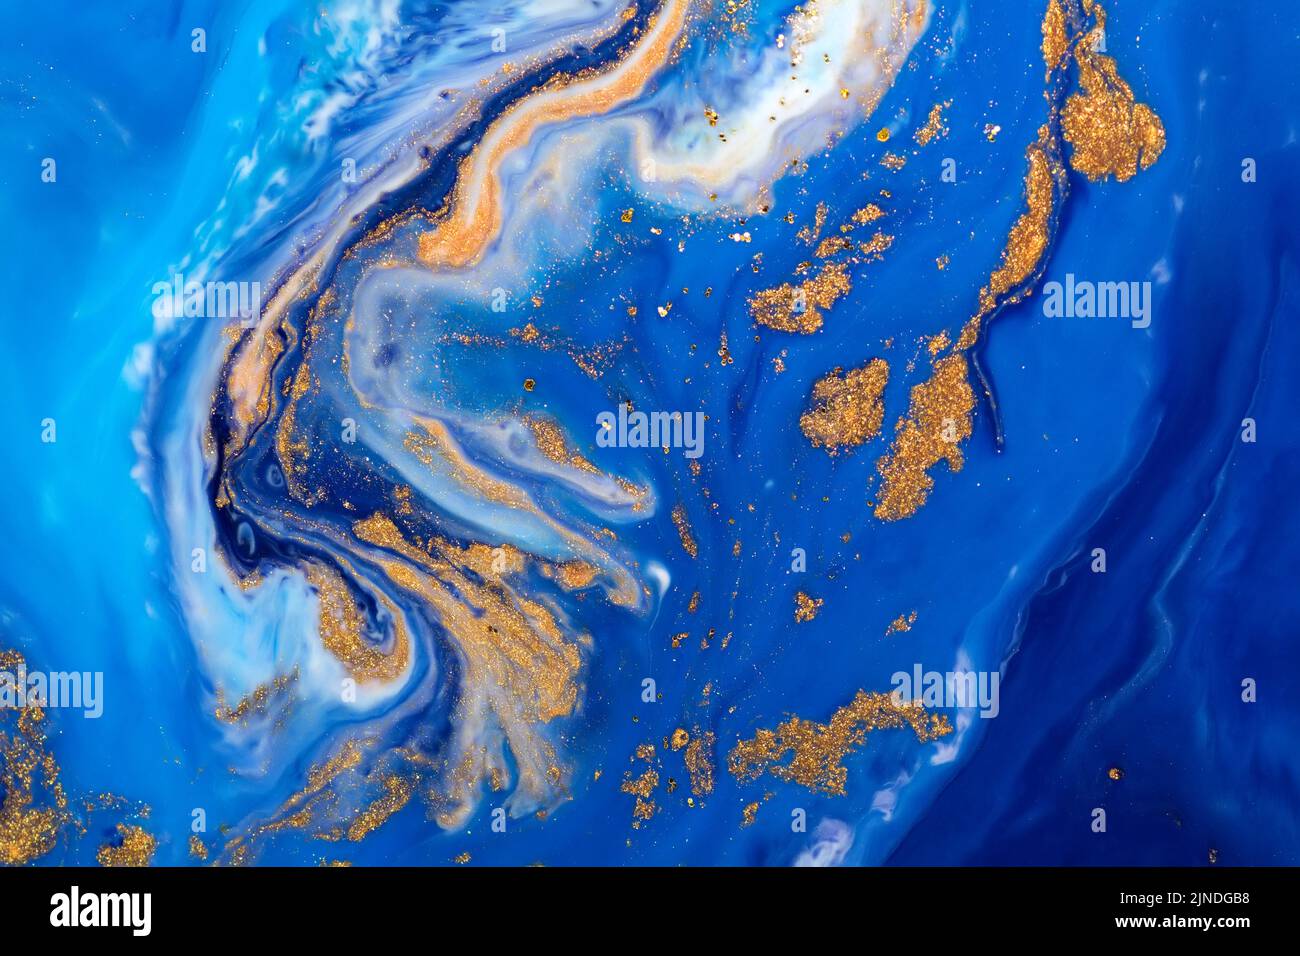 Luxury fluid art painting background. Spilled blue, white and gold acrylic paint. Liquid marble. Alcohol ink splash. Stock Photo